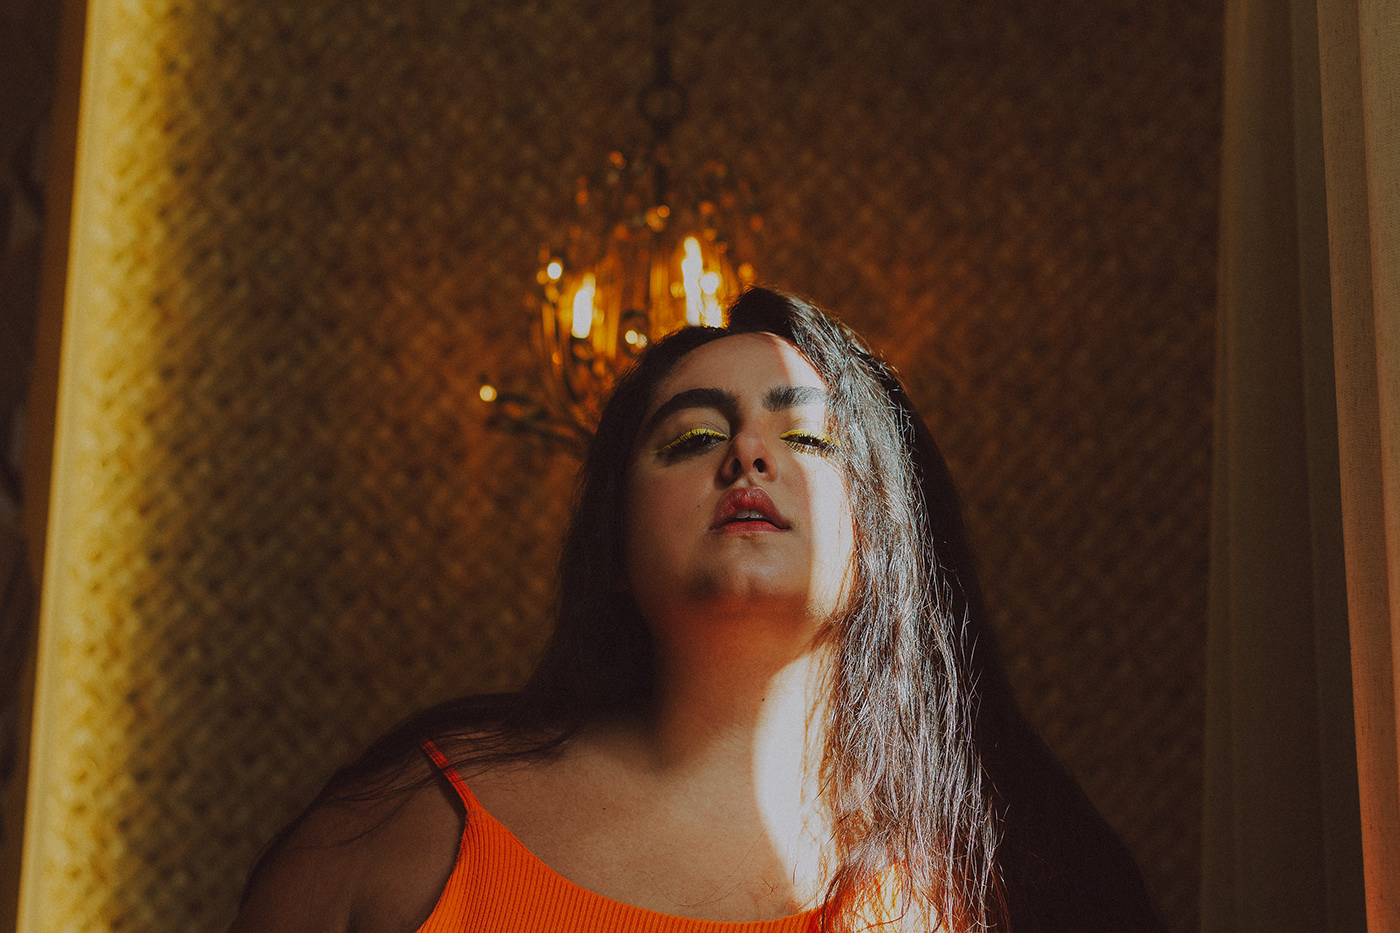 photoshoot indoor naturallight woman portrait